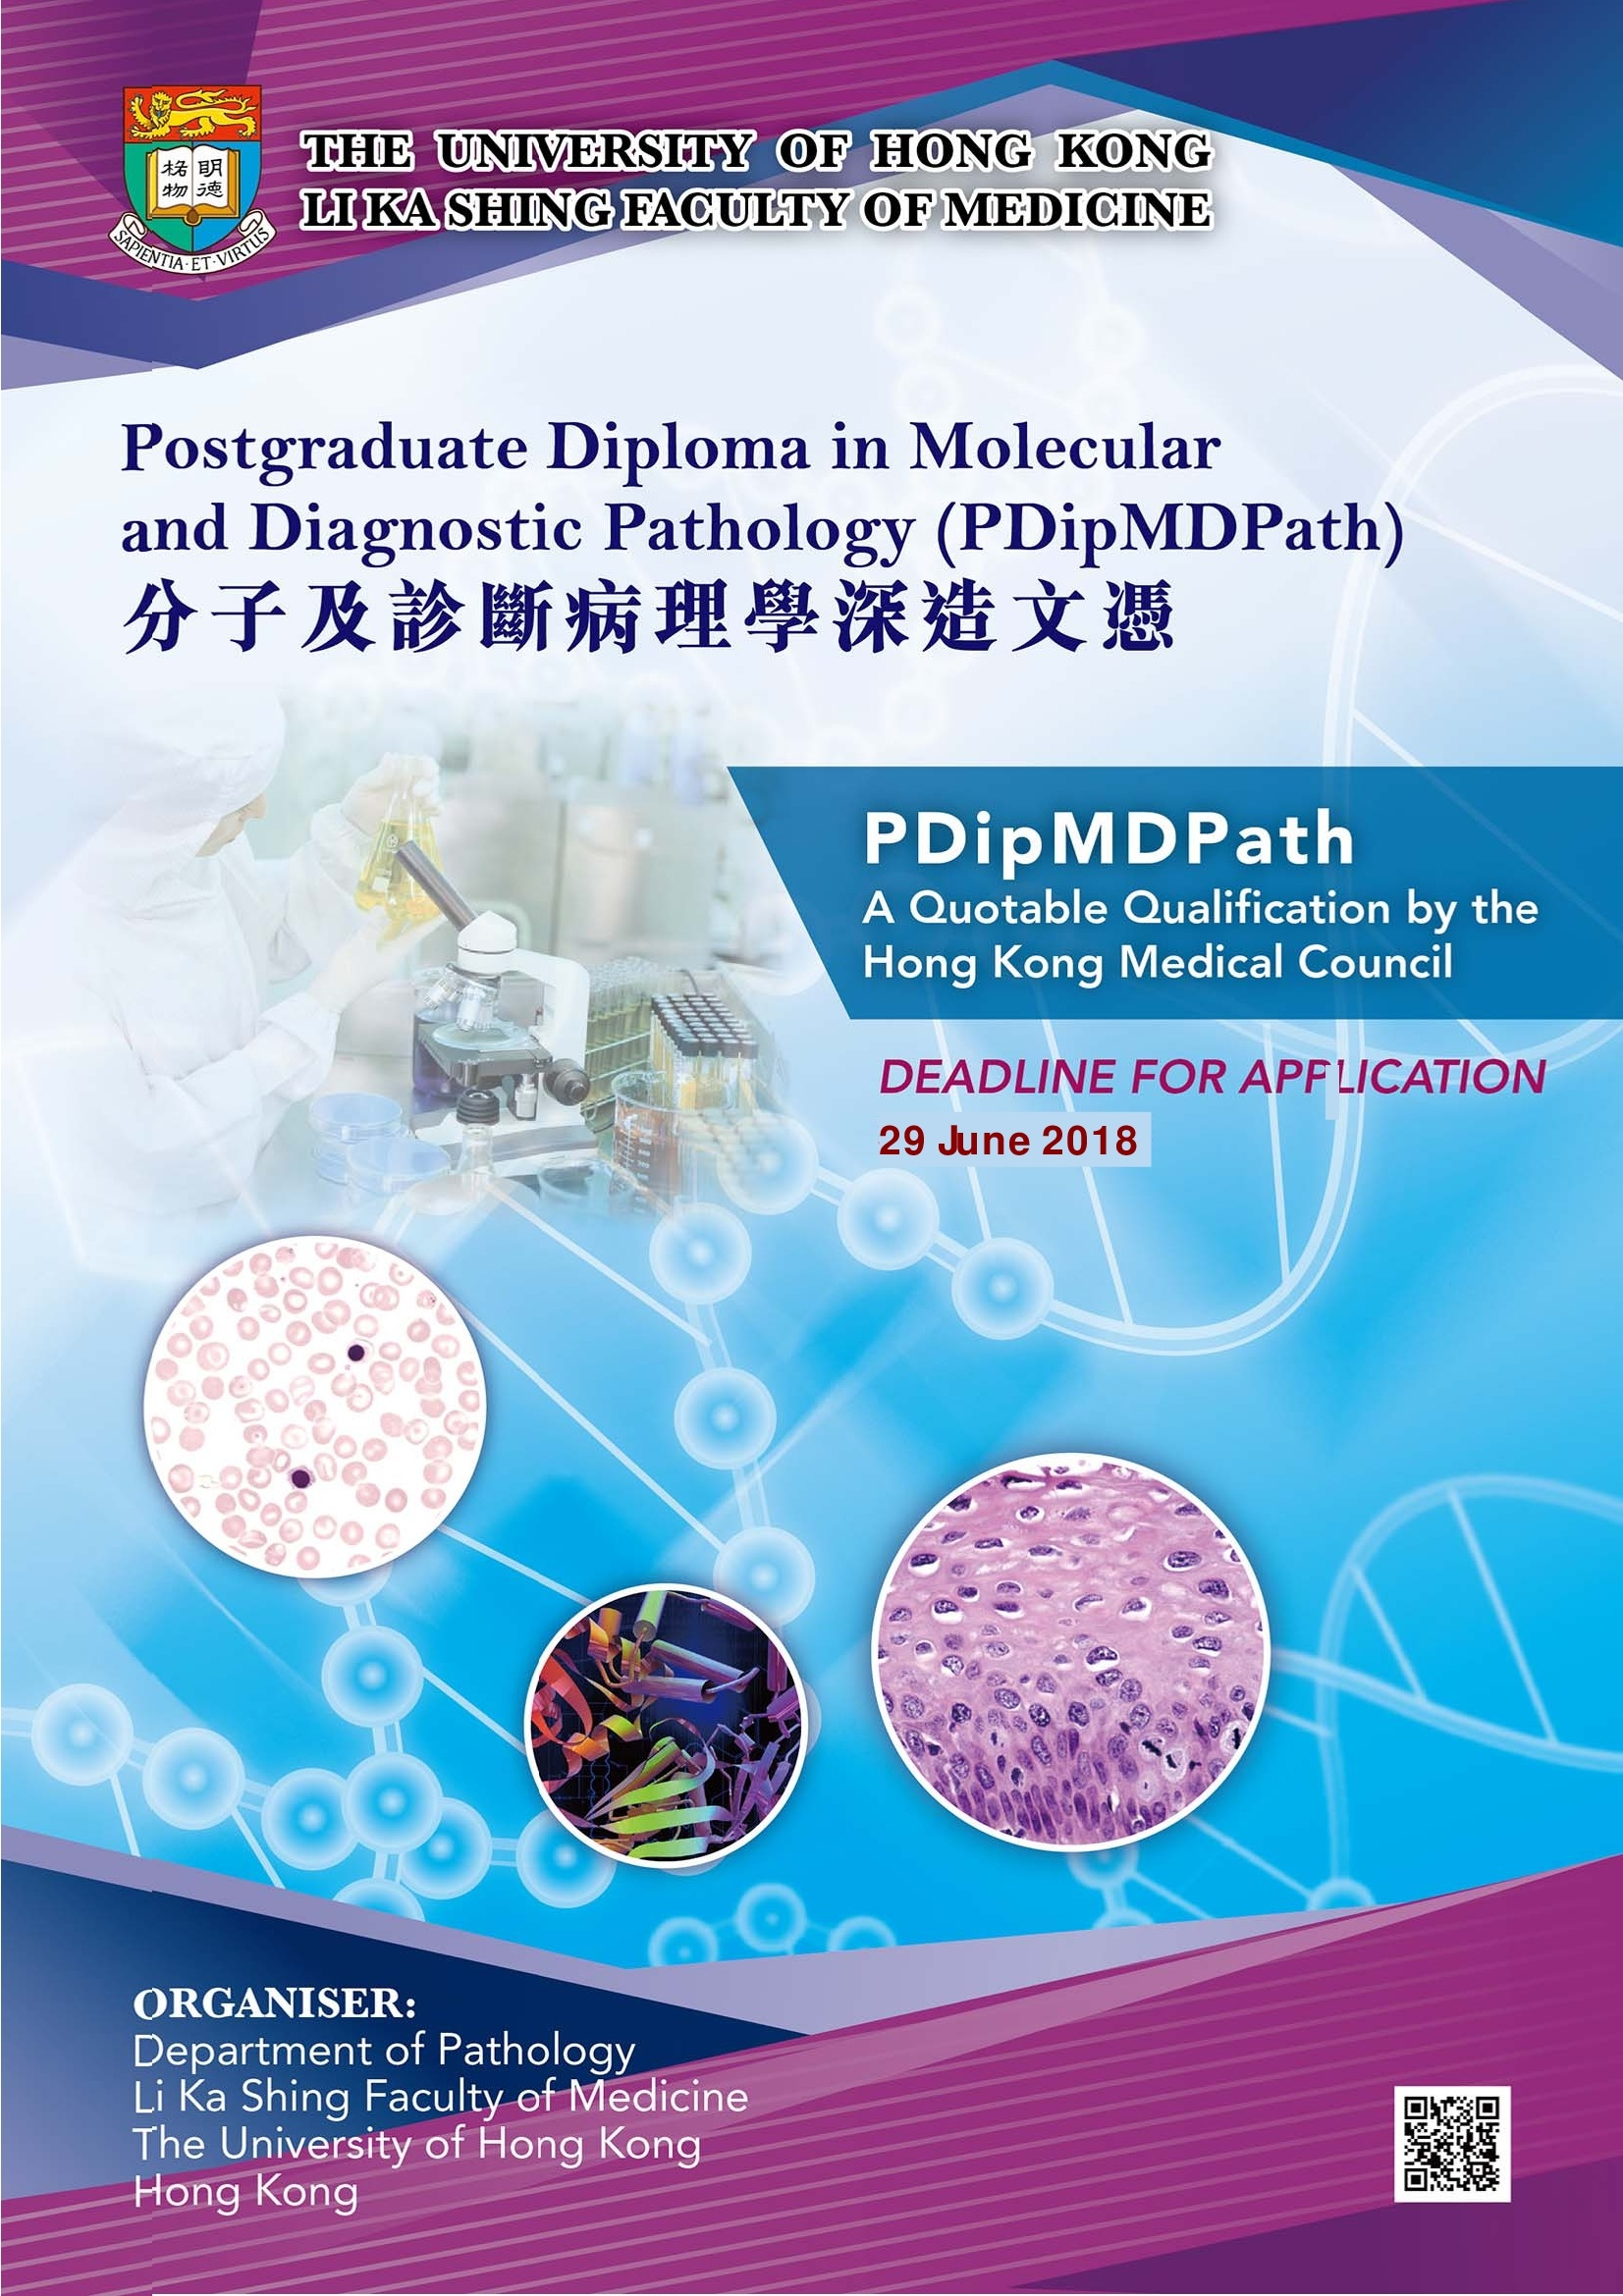 Revised deadline: Postgraduate Diploma in Molecular & Diagnostic Pathology